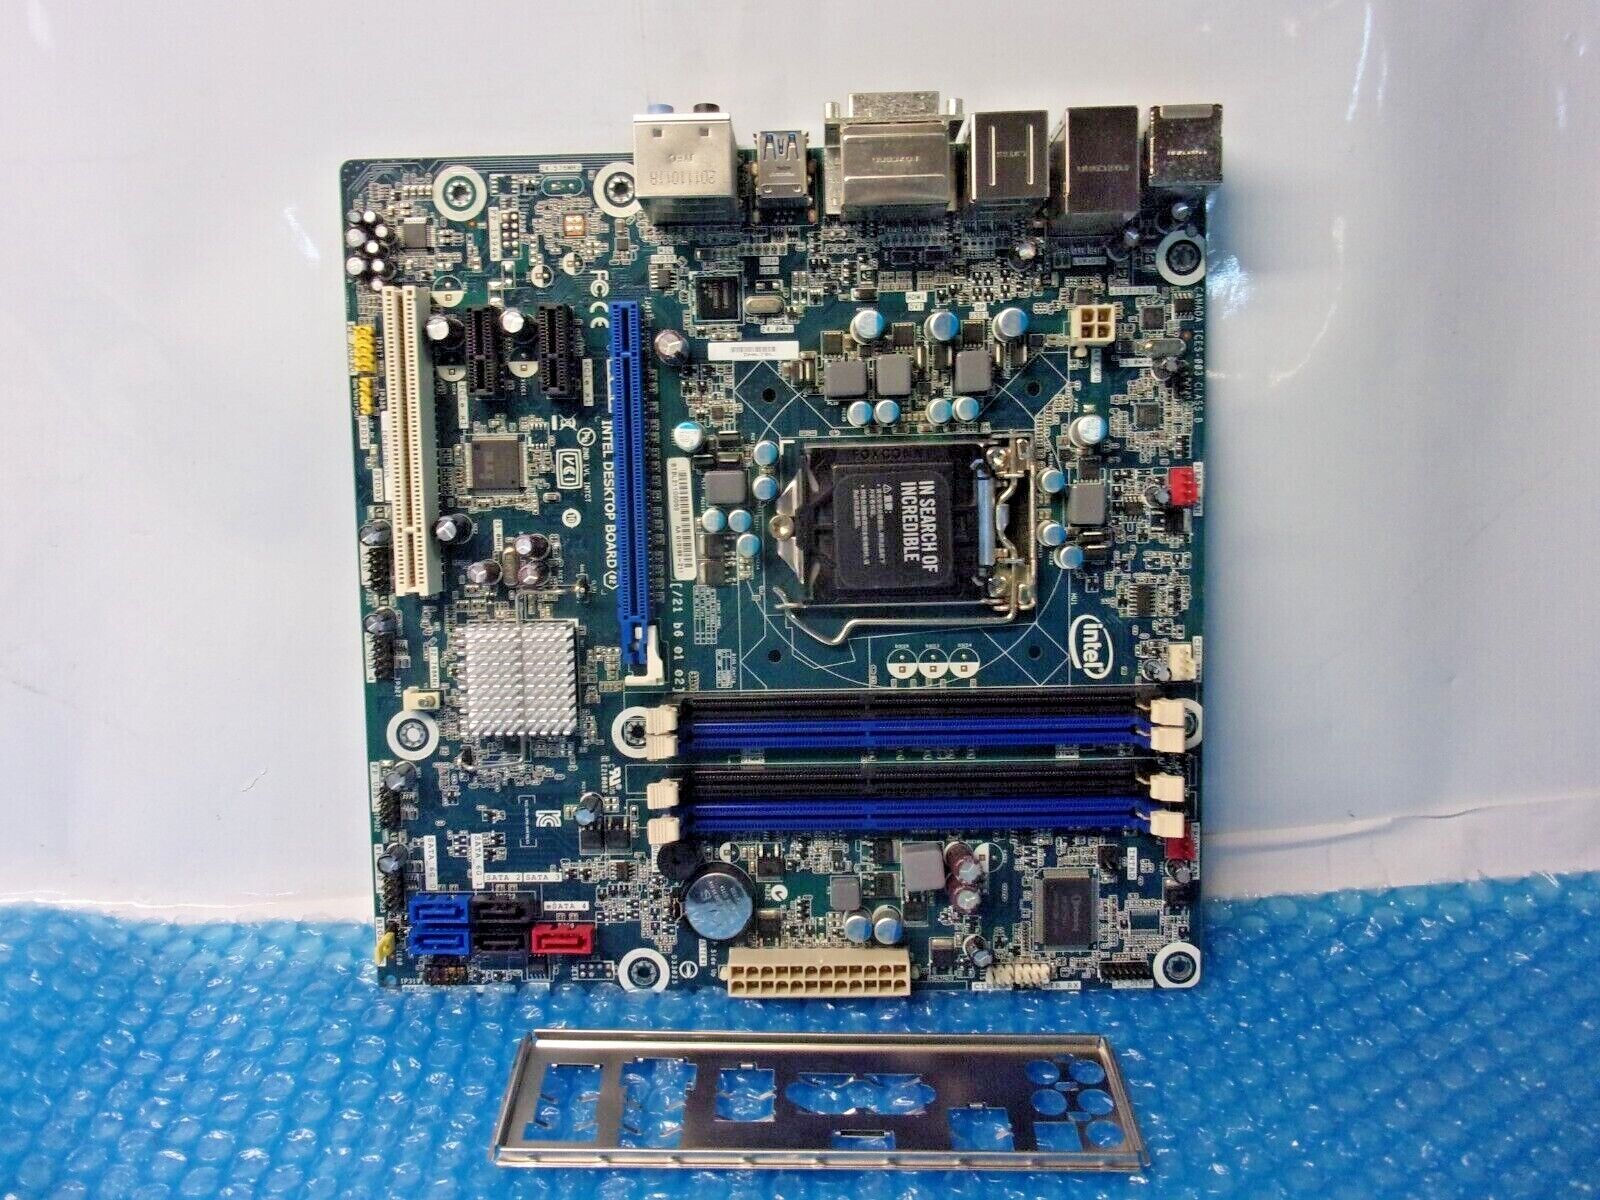 Intel DH67BL LGA 1155 Micro ATX DDR3 Motherboard with I/O Shield